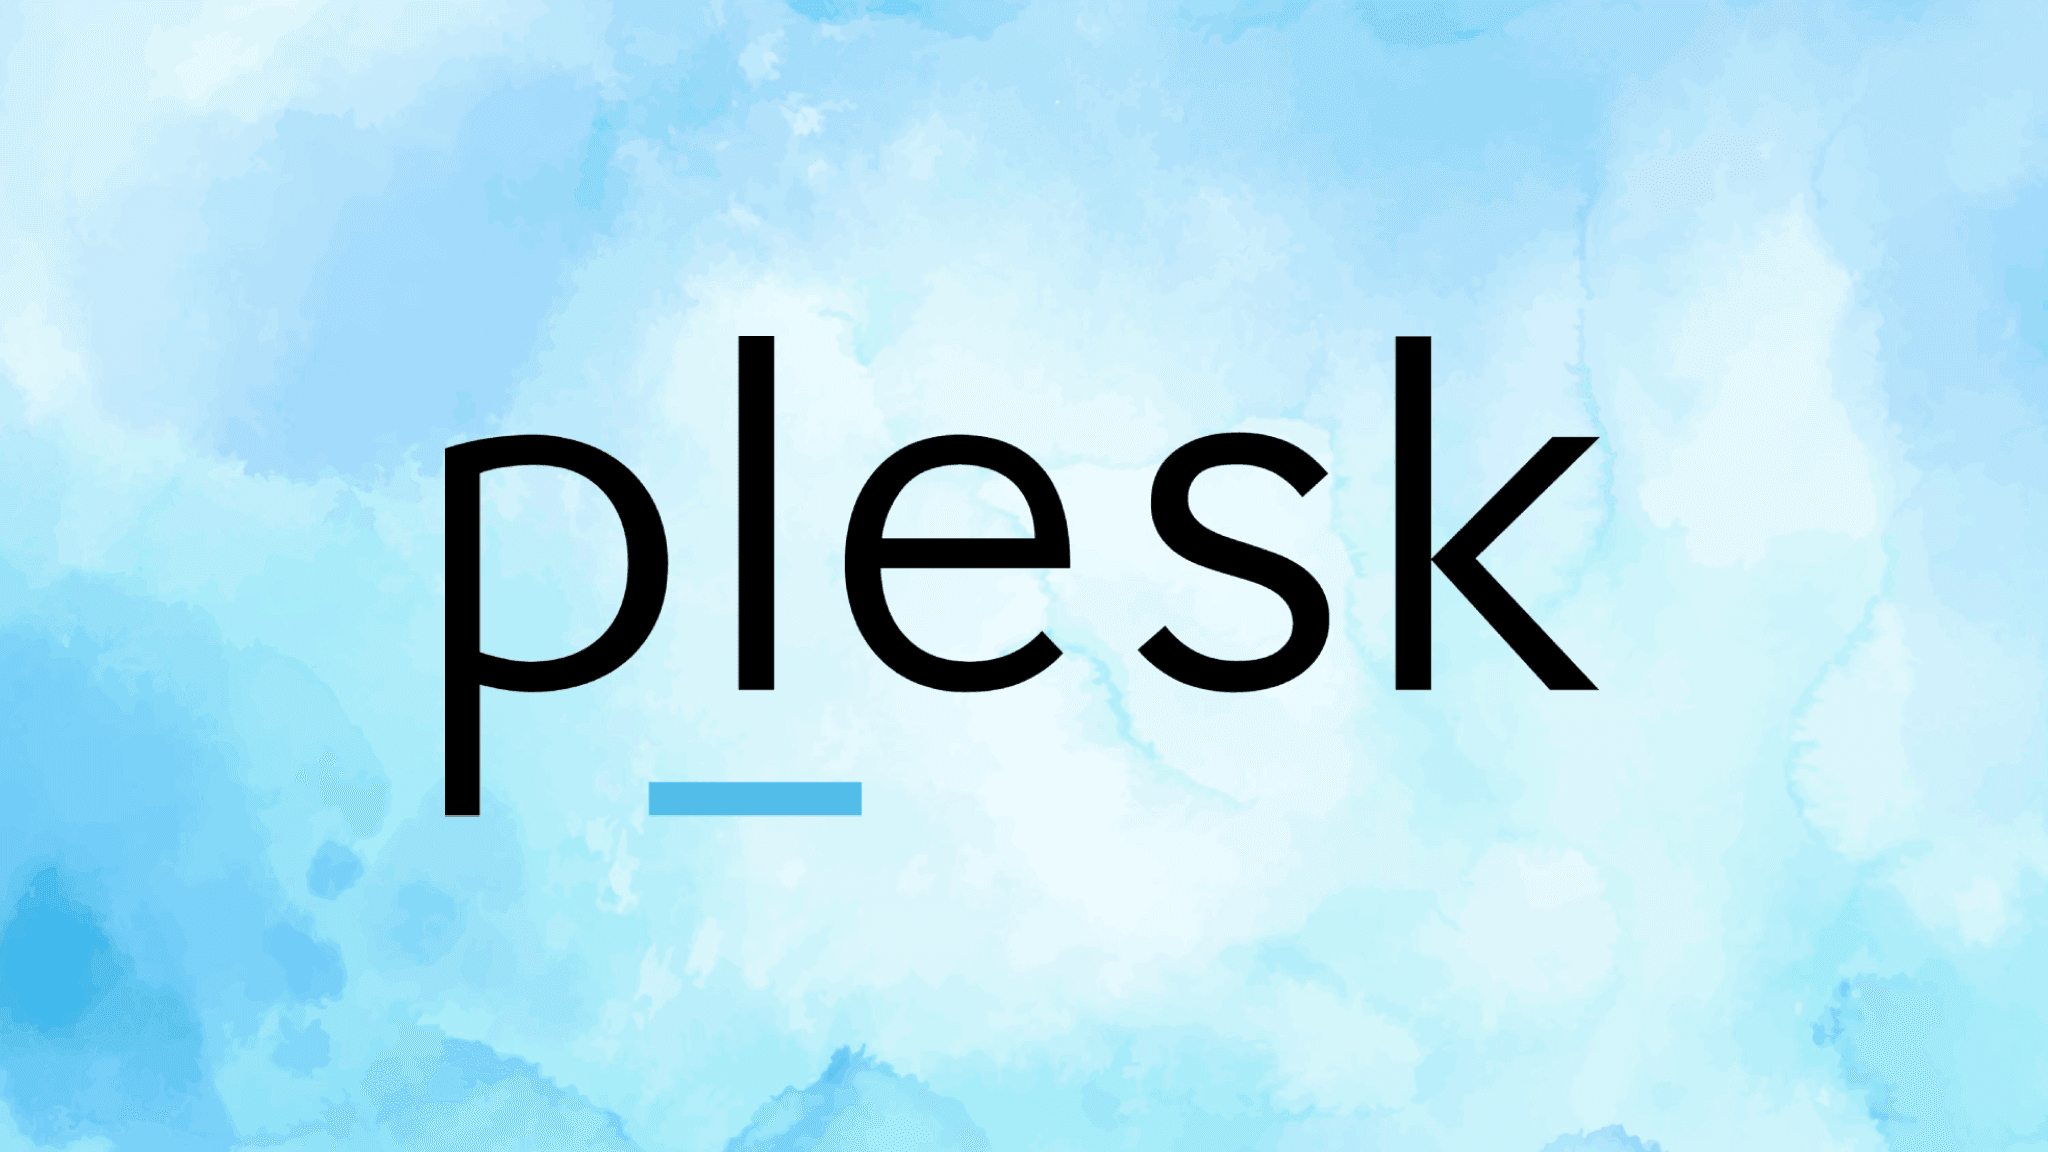 Plesk Innovative Hosting Control Panel for Wordpress